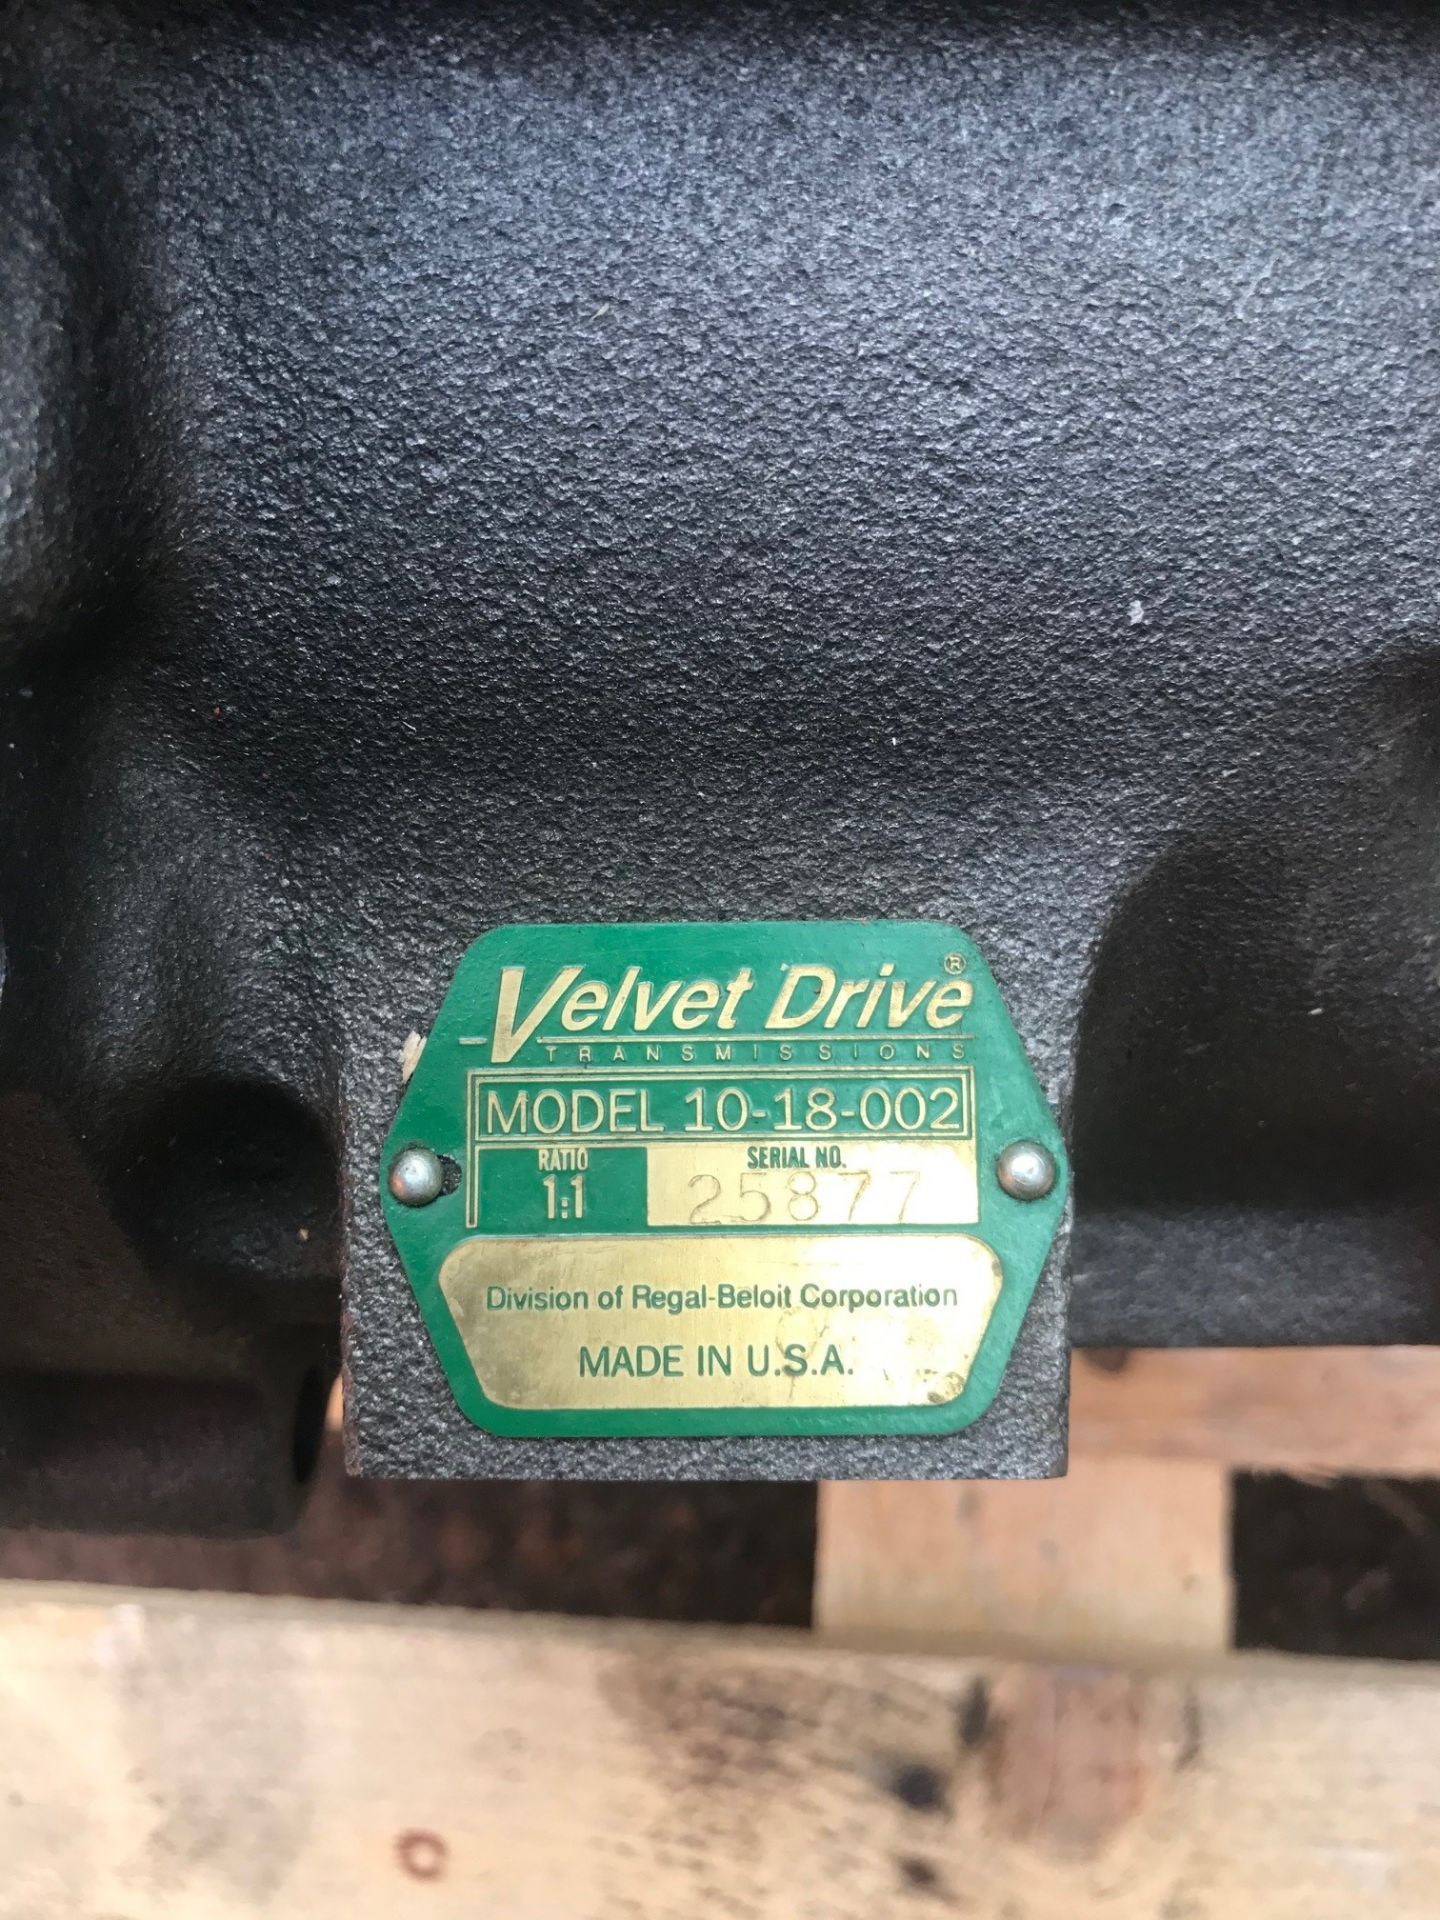 Borg Warner velvet drive 10-18-002 Ratio 1.1:1 Marine Gearbox - Image 5 of 5